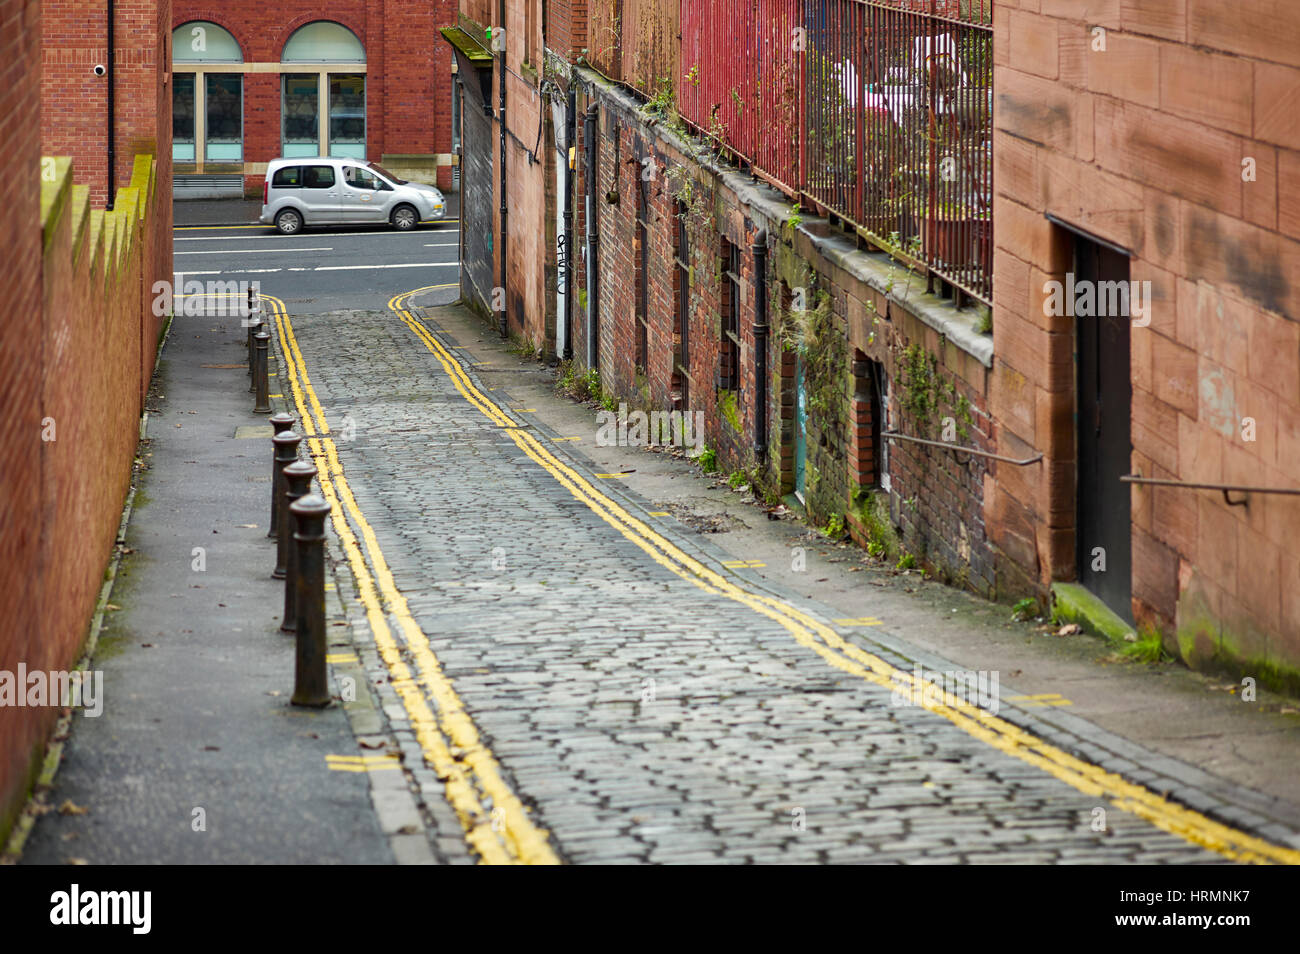 Narrow street in Glasgows Stock Photo